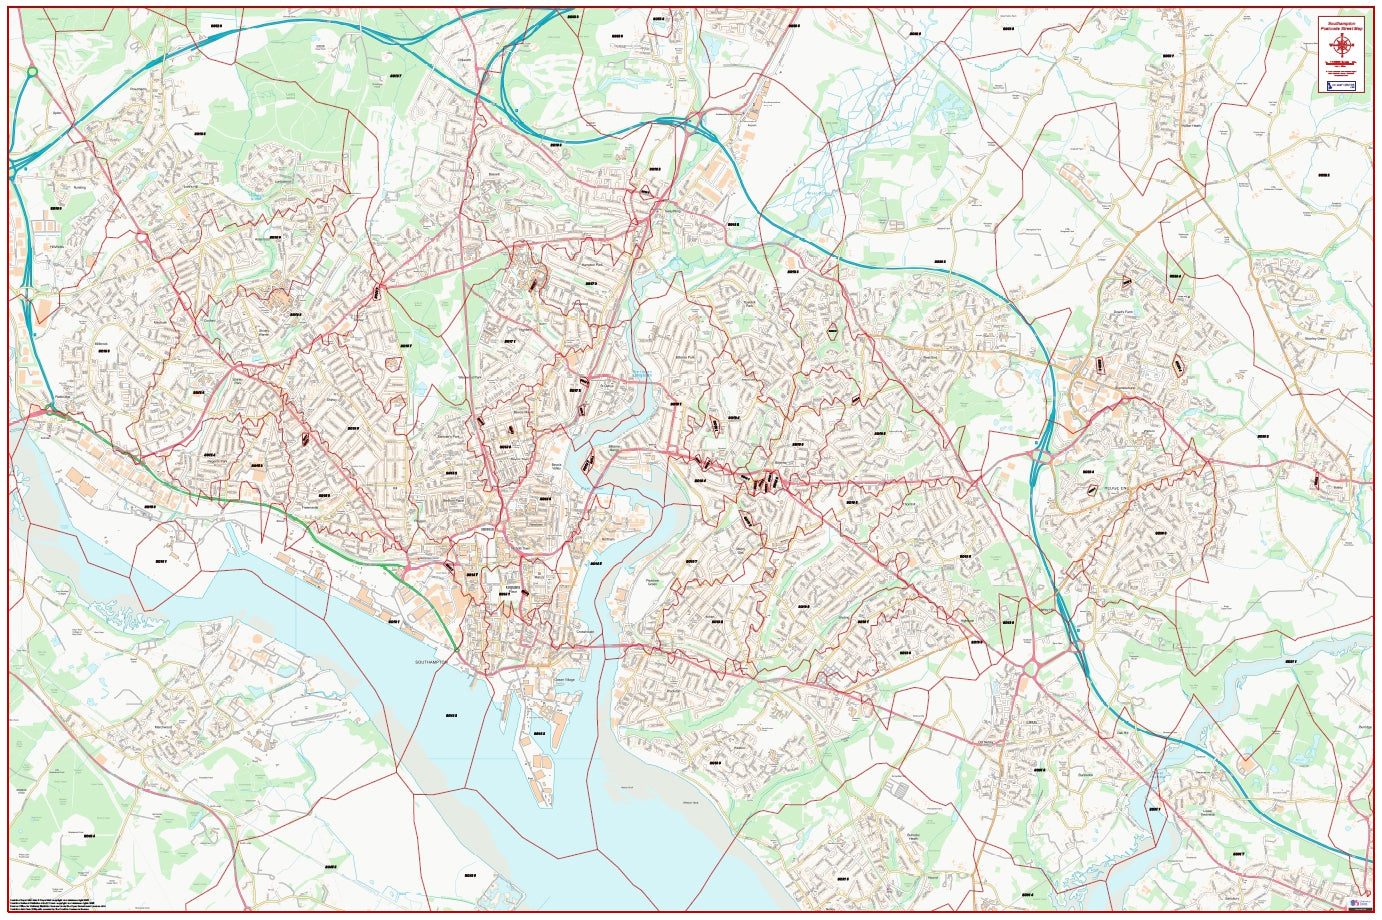 Central Southampton Postcode City Street Map - Digital Download